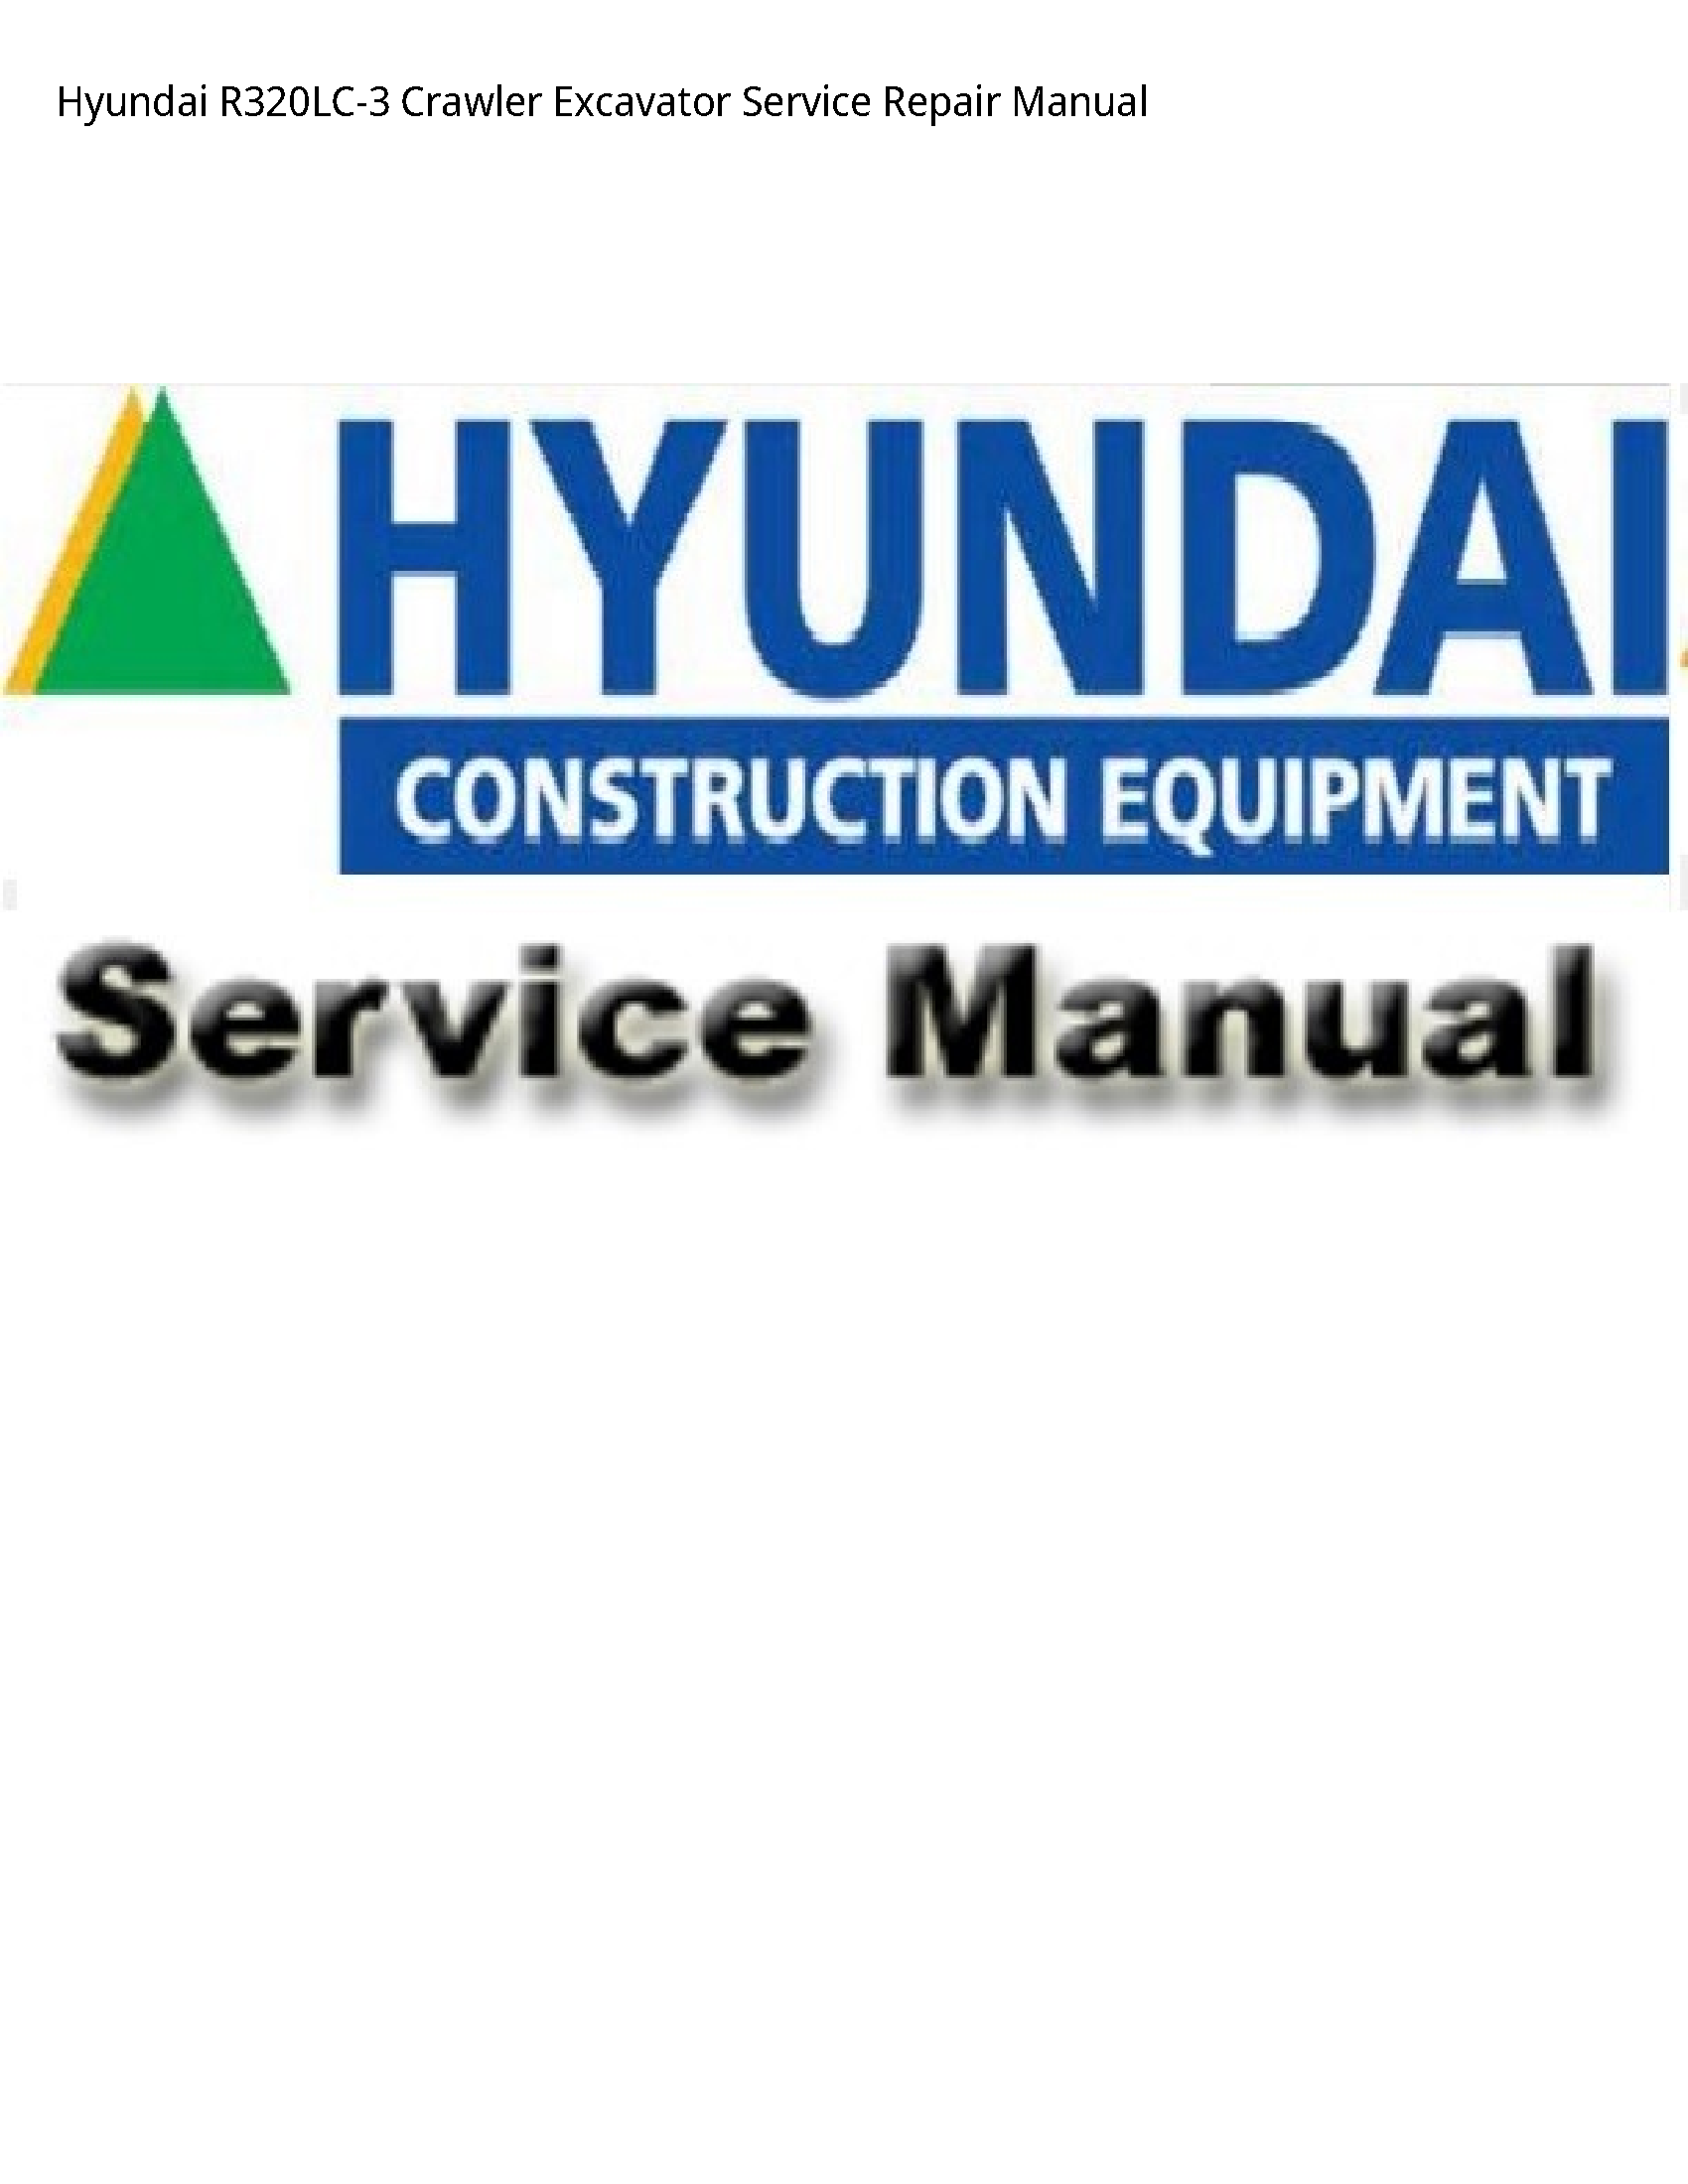 Hyundai R320LC-3 Crawler Excavator manual